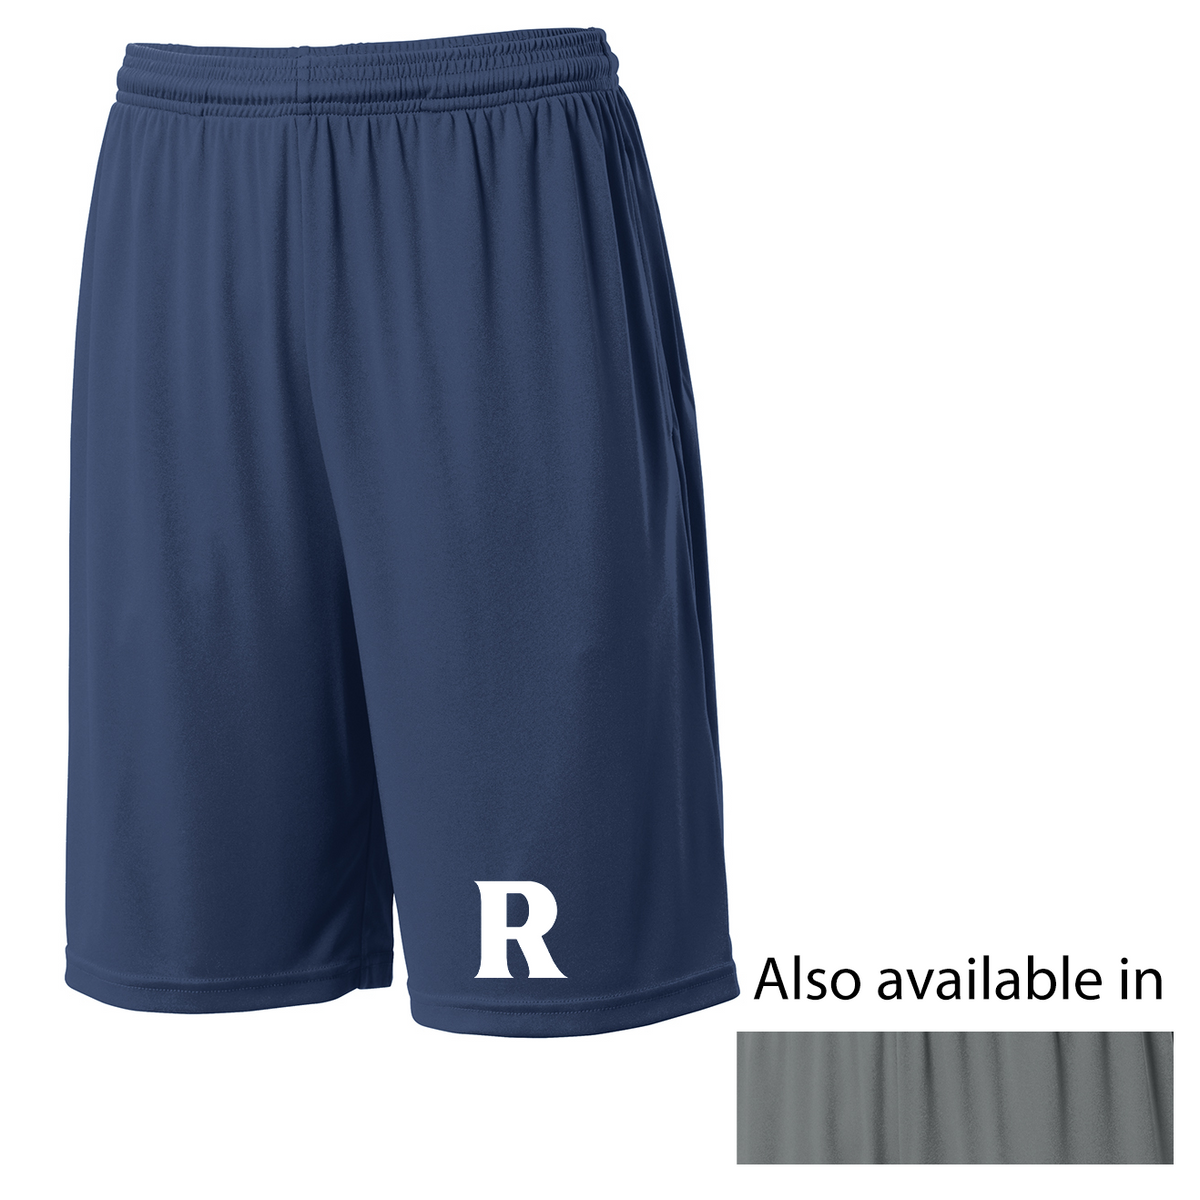 Rogers Lacrosse Shorts